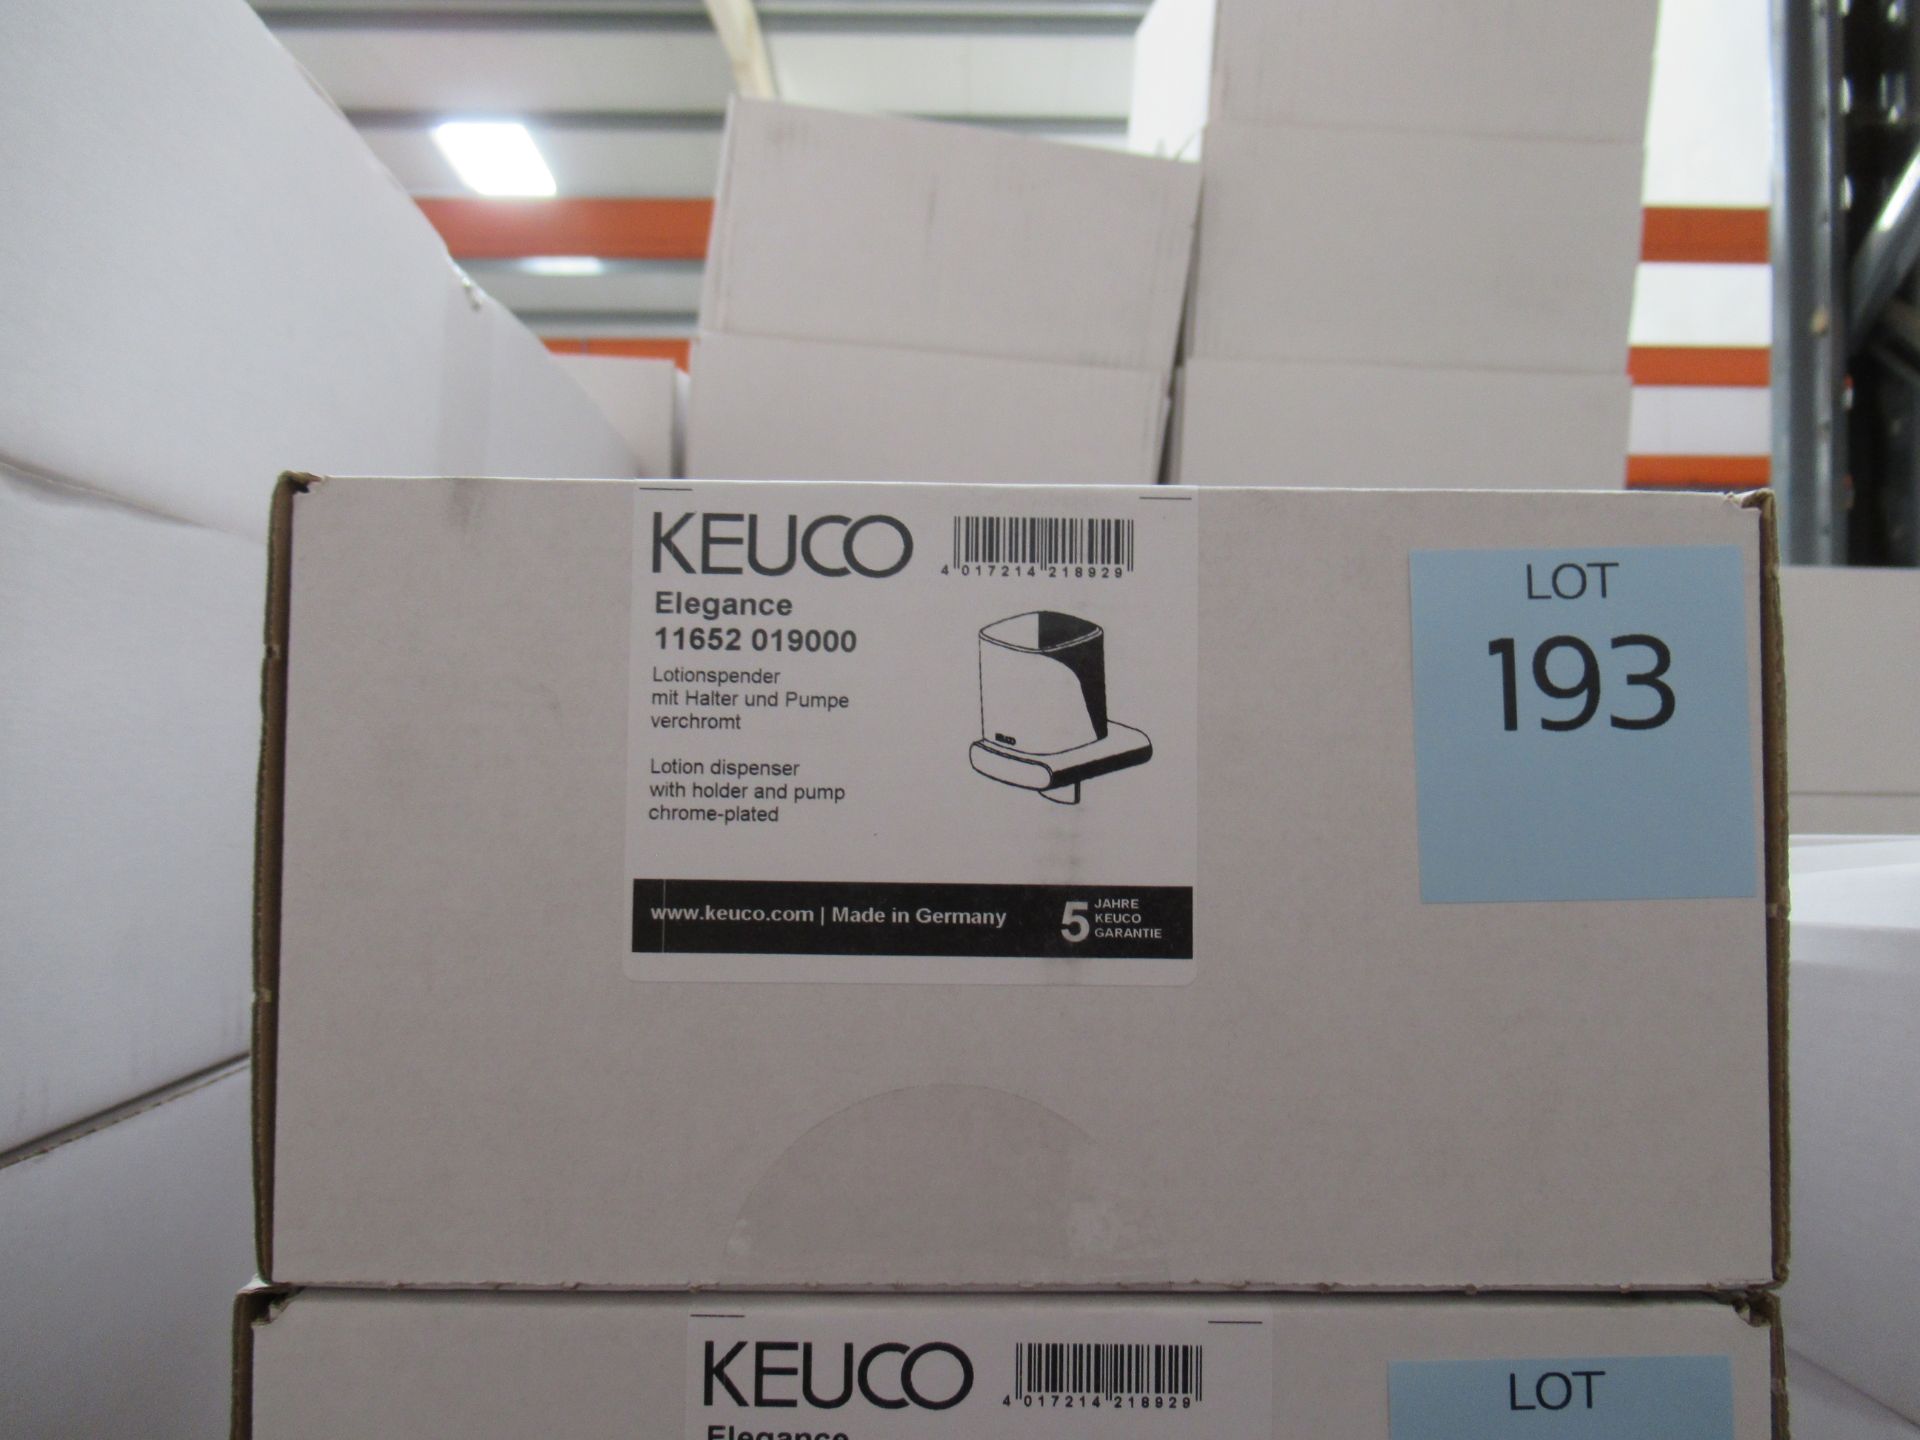 A Keuco Elegance Lotion Dispenser Chrome Plated, P/N11652-019000 - Image 2 of 2